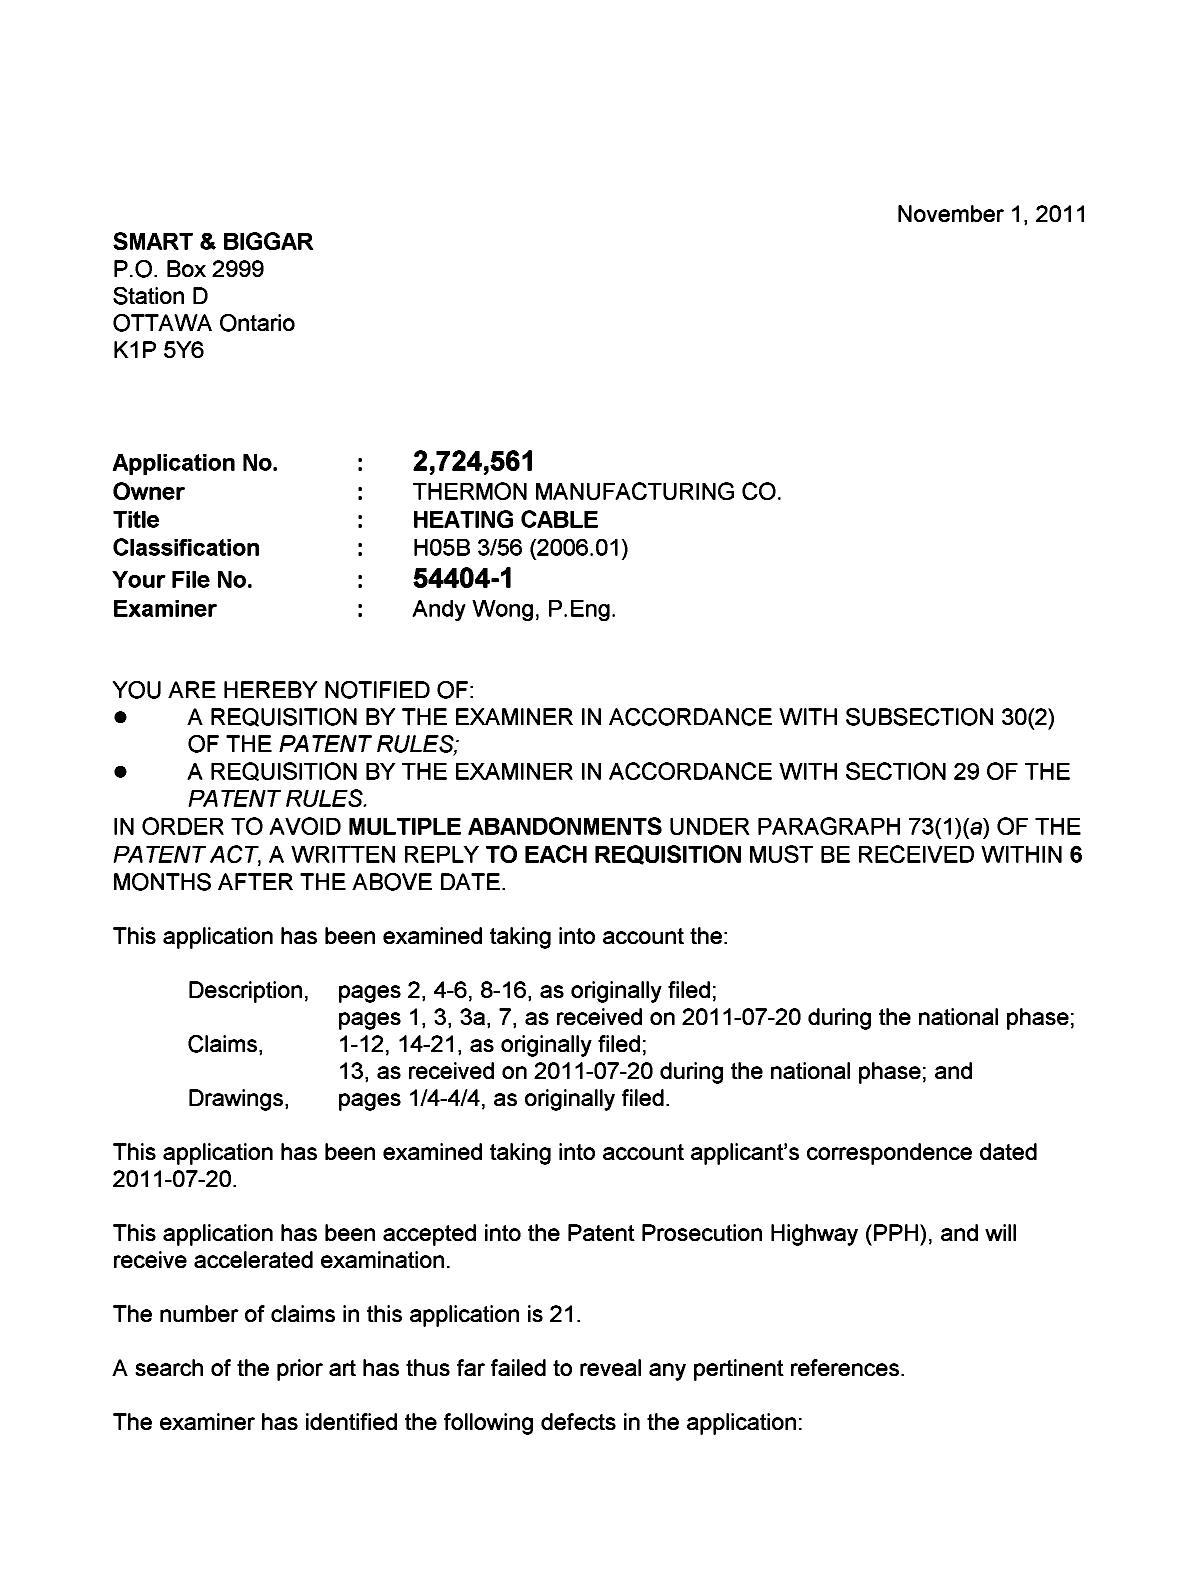 Canadian Patent Document 2724561. Prosecution-Amendment 20101201. Image 1 of 2